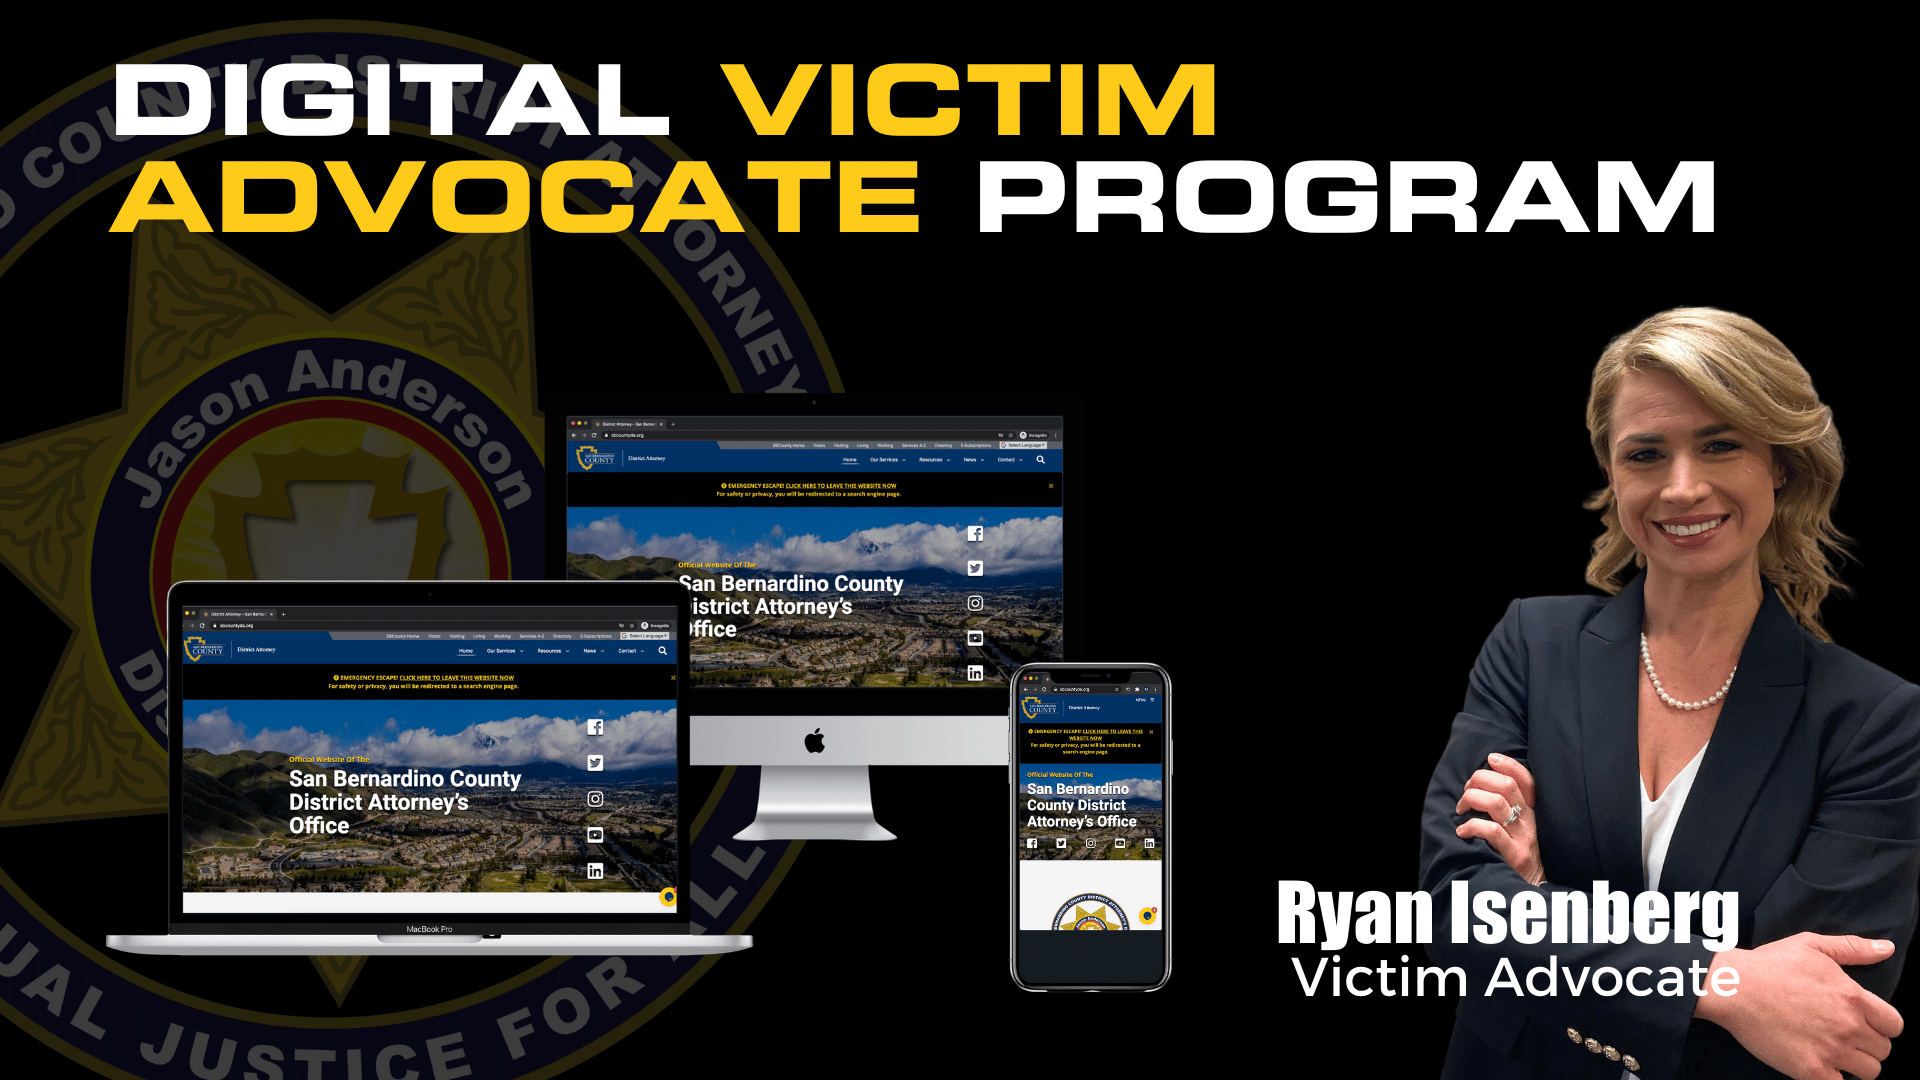 Advertisement for the digital victim advocate program